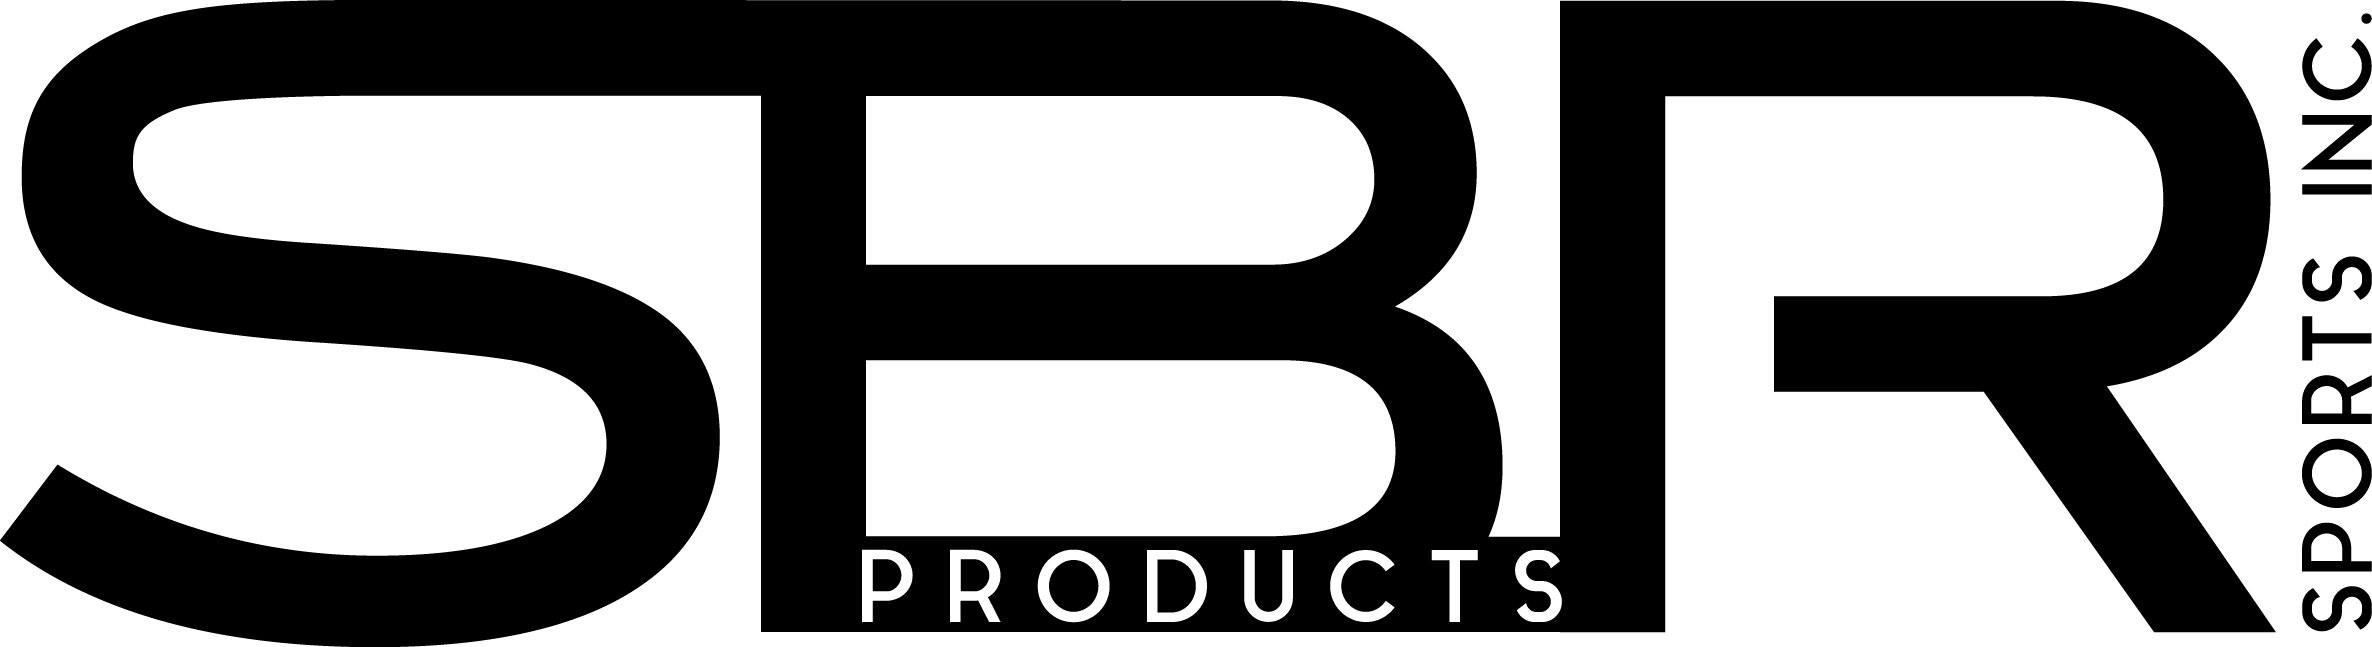 SBR_logo.jpg